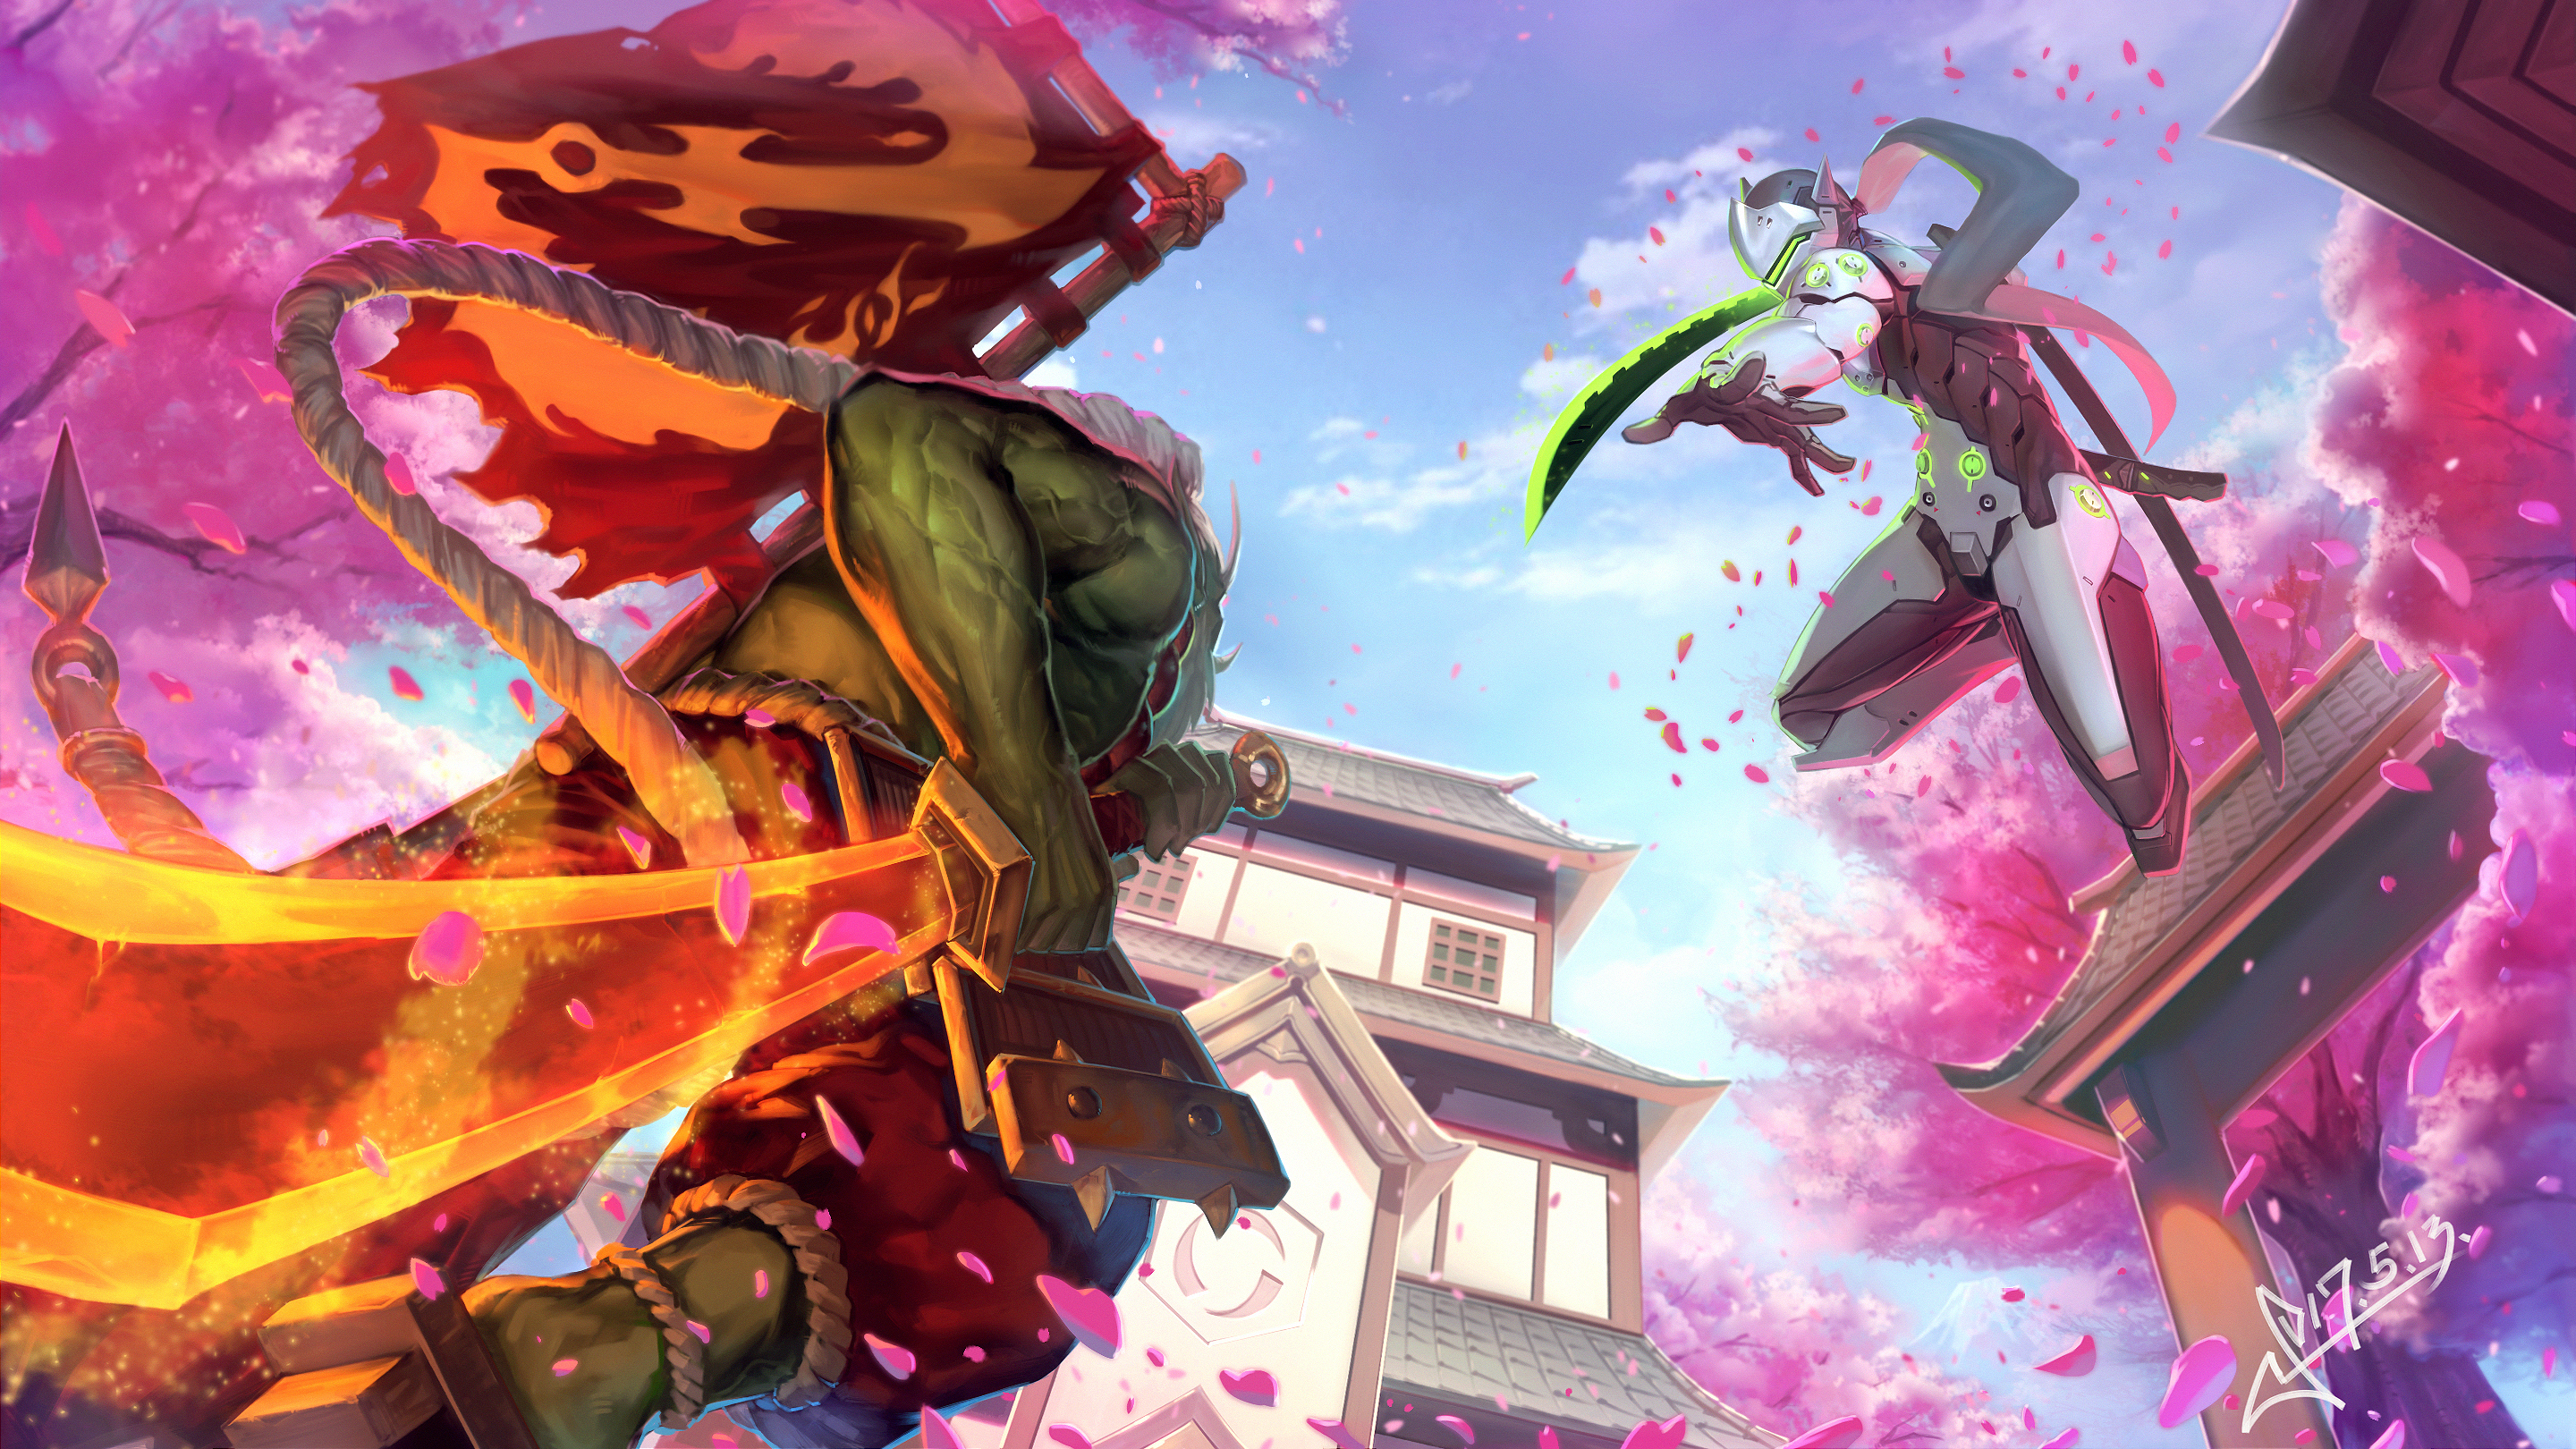 Overwatch Genji Overwatch Genji Shimada Sakura Tree Samuro Warcraft Weapon Sword Heroes Of The Storm 2880x1620